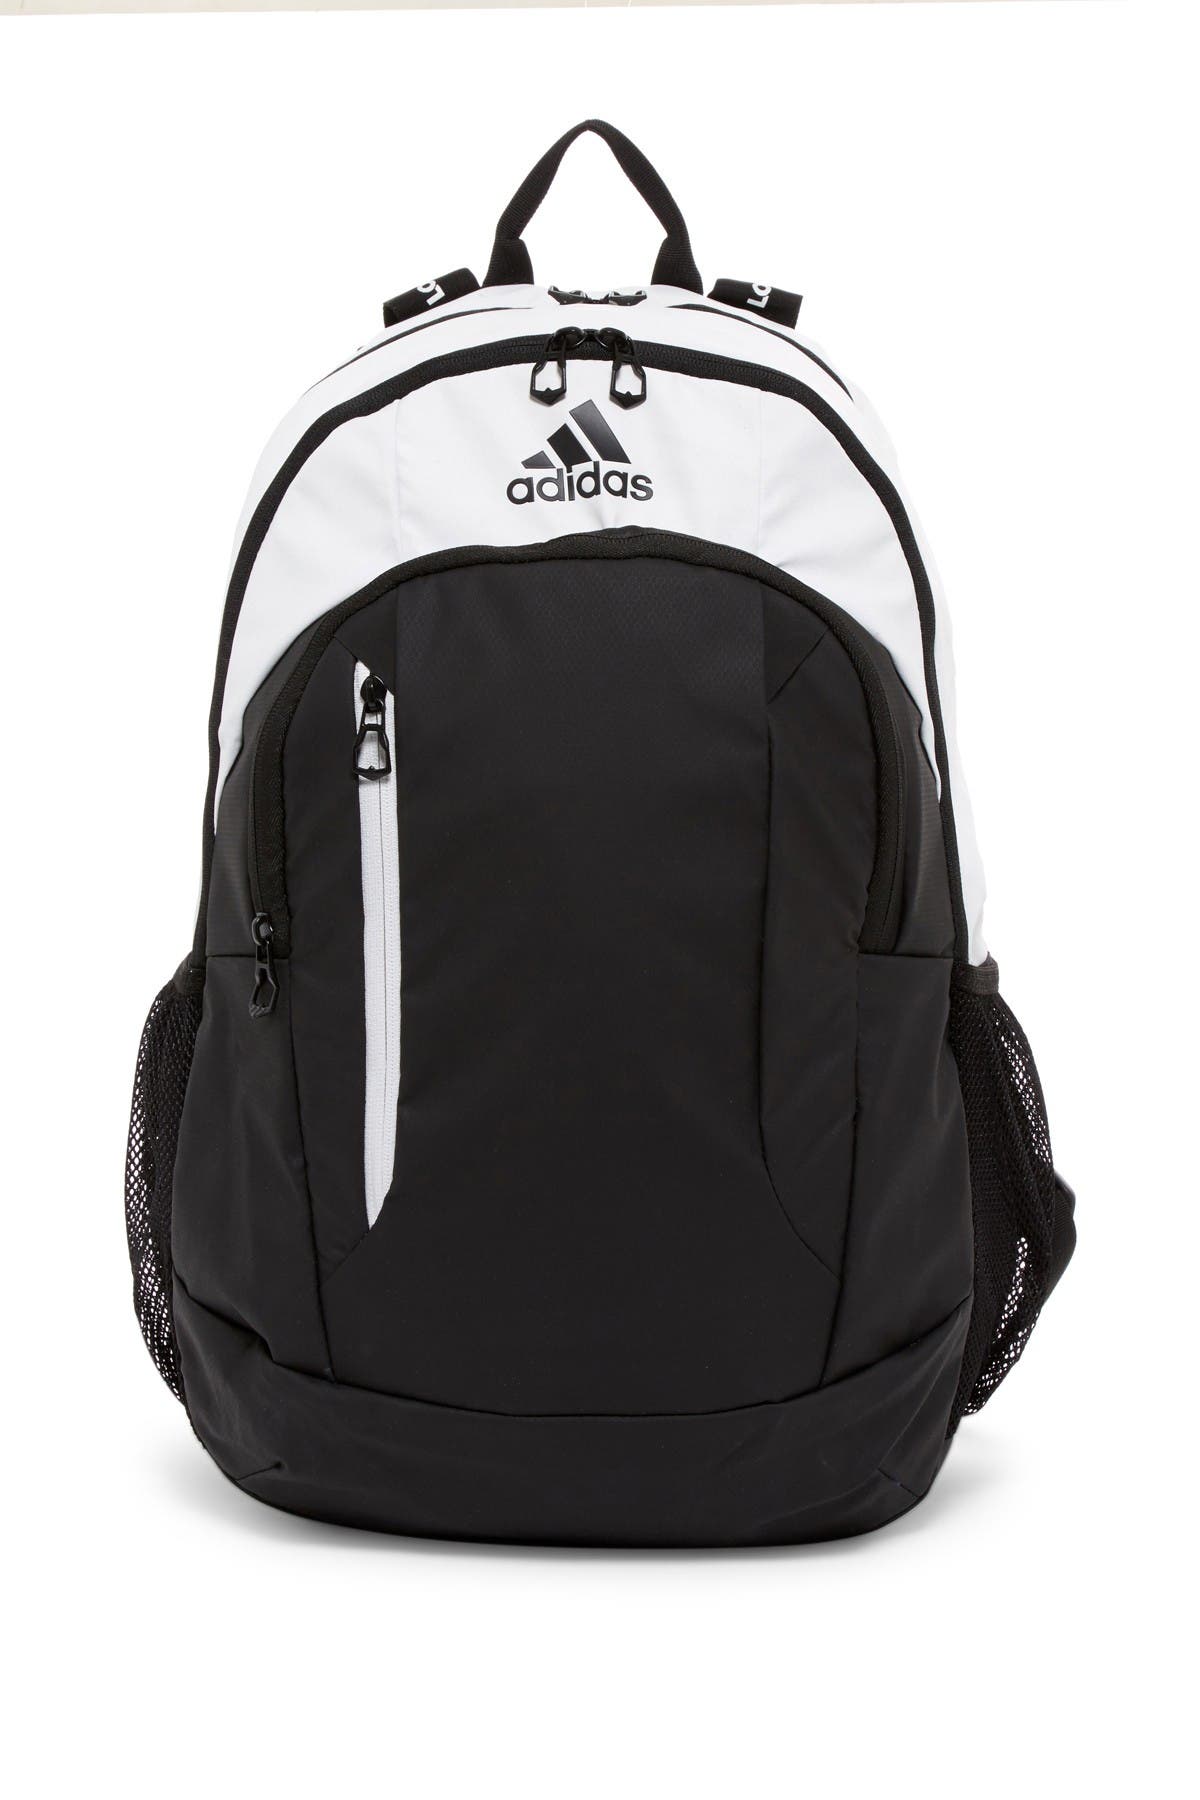 adidas mission ii backpack